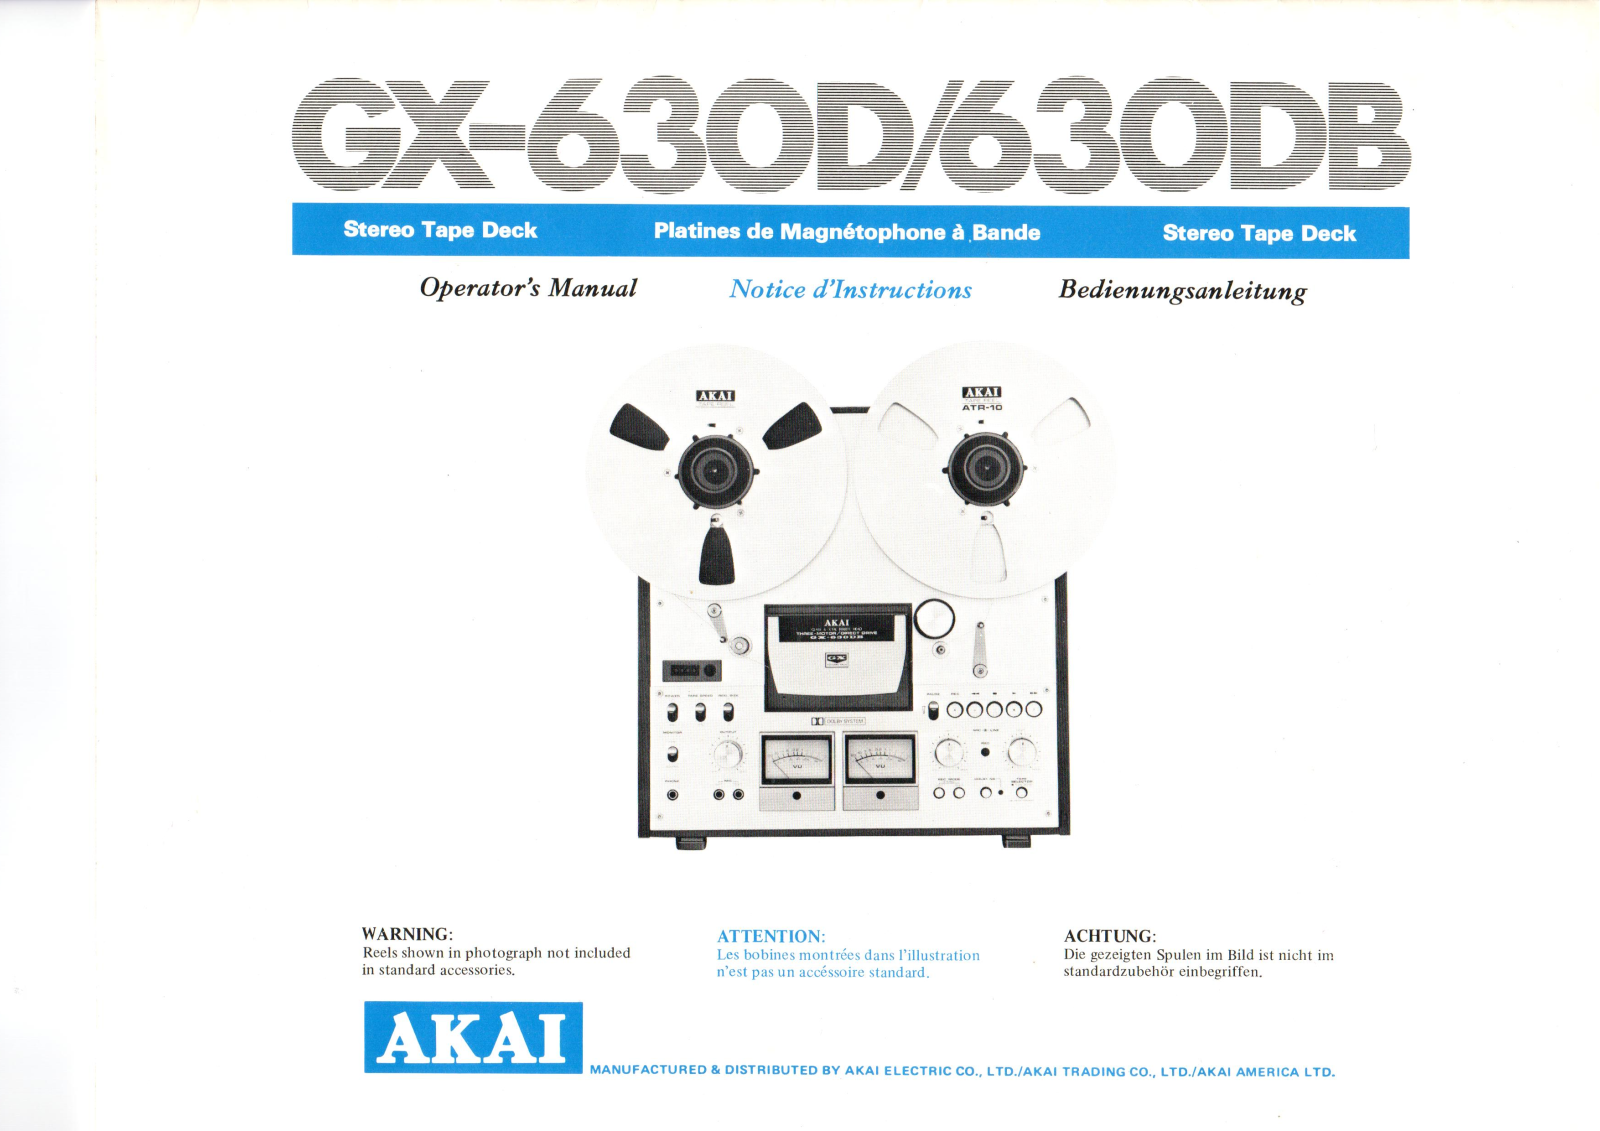 Akai gx 630d, gx 630db Operator